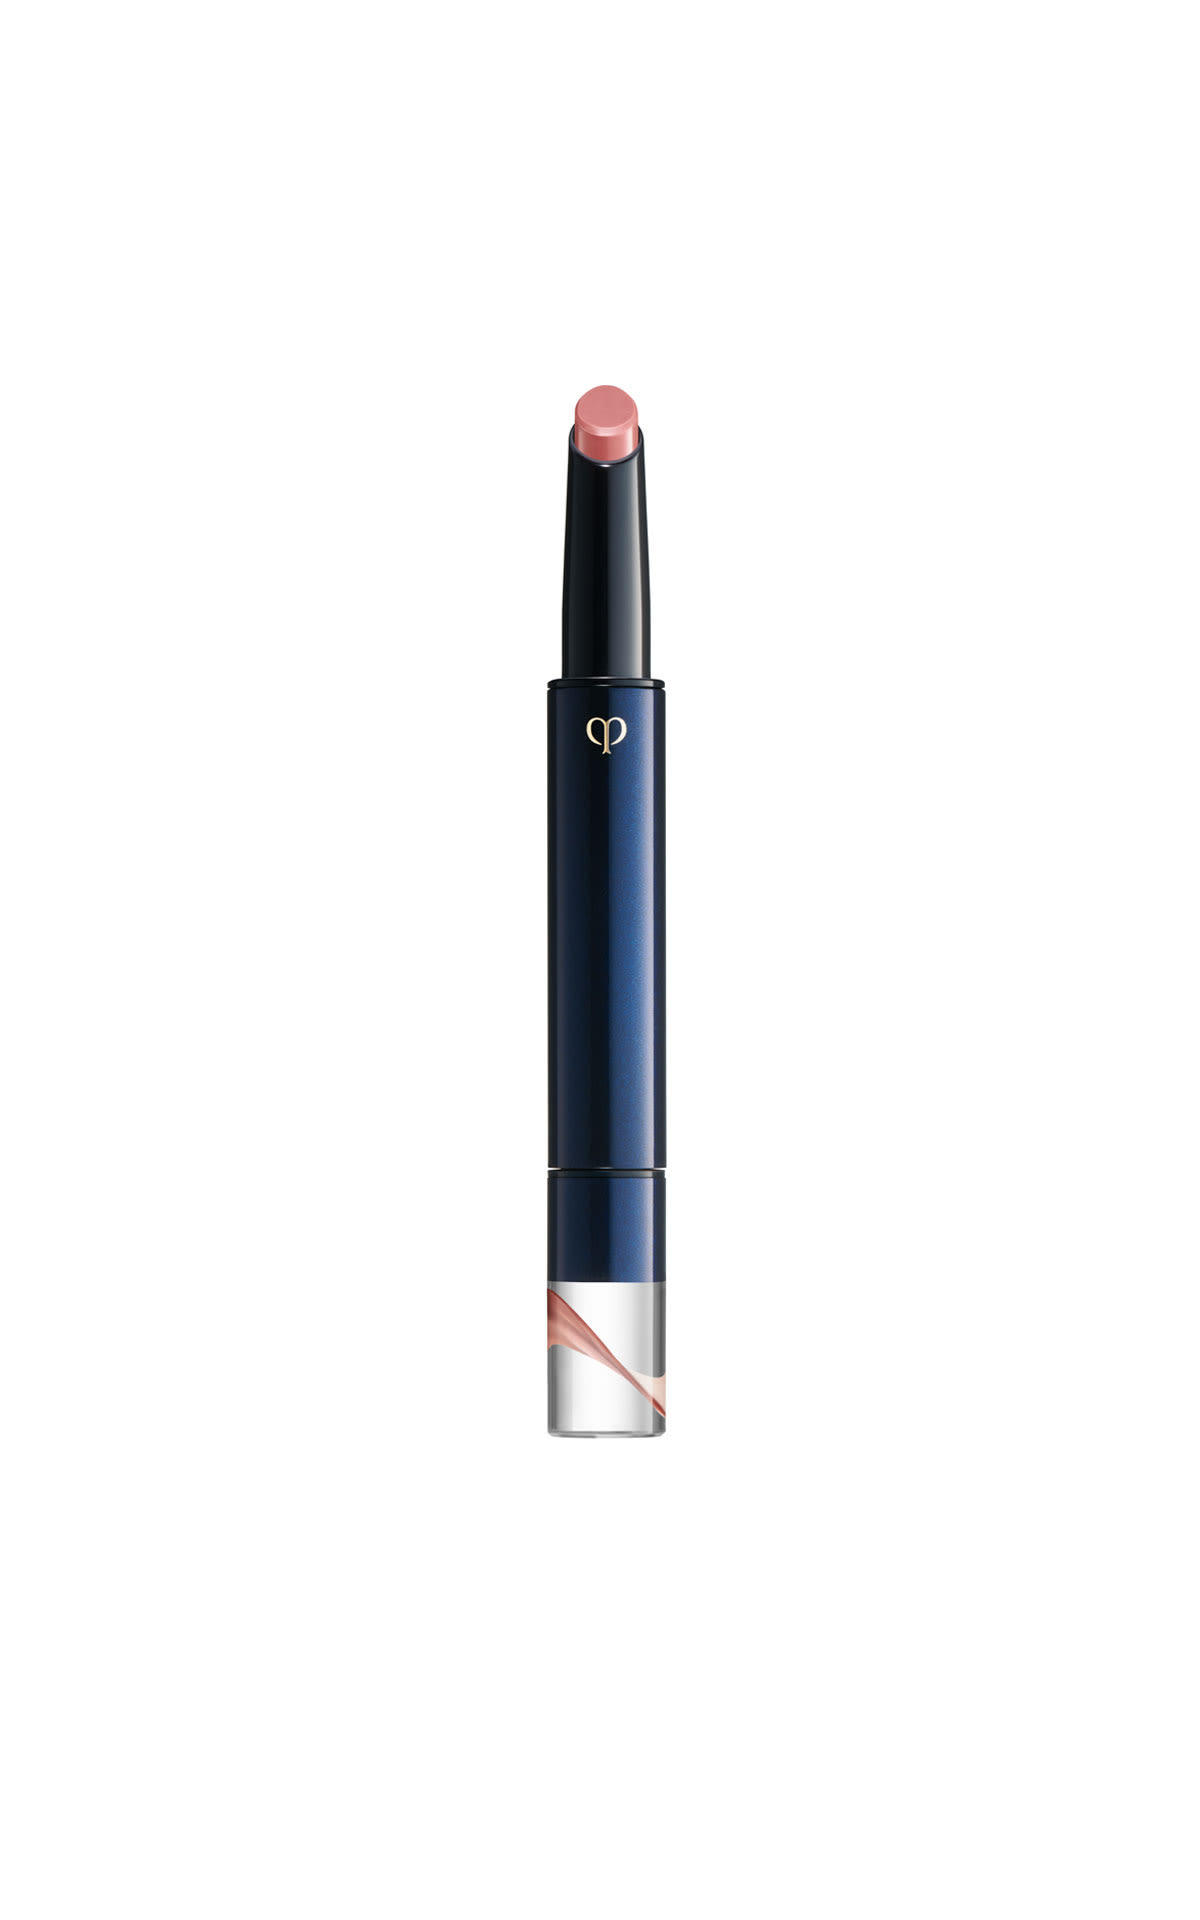 Beaute Prestige International CPB refined lip luminzer 01 from Bicester Village